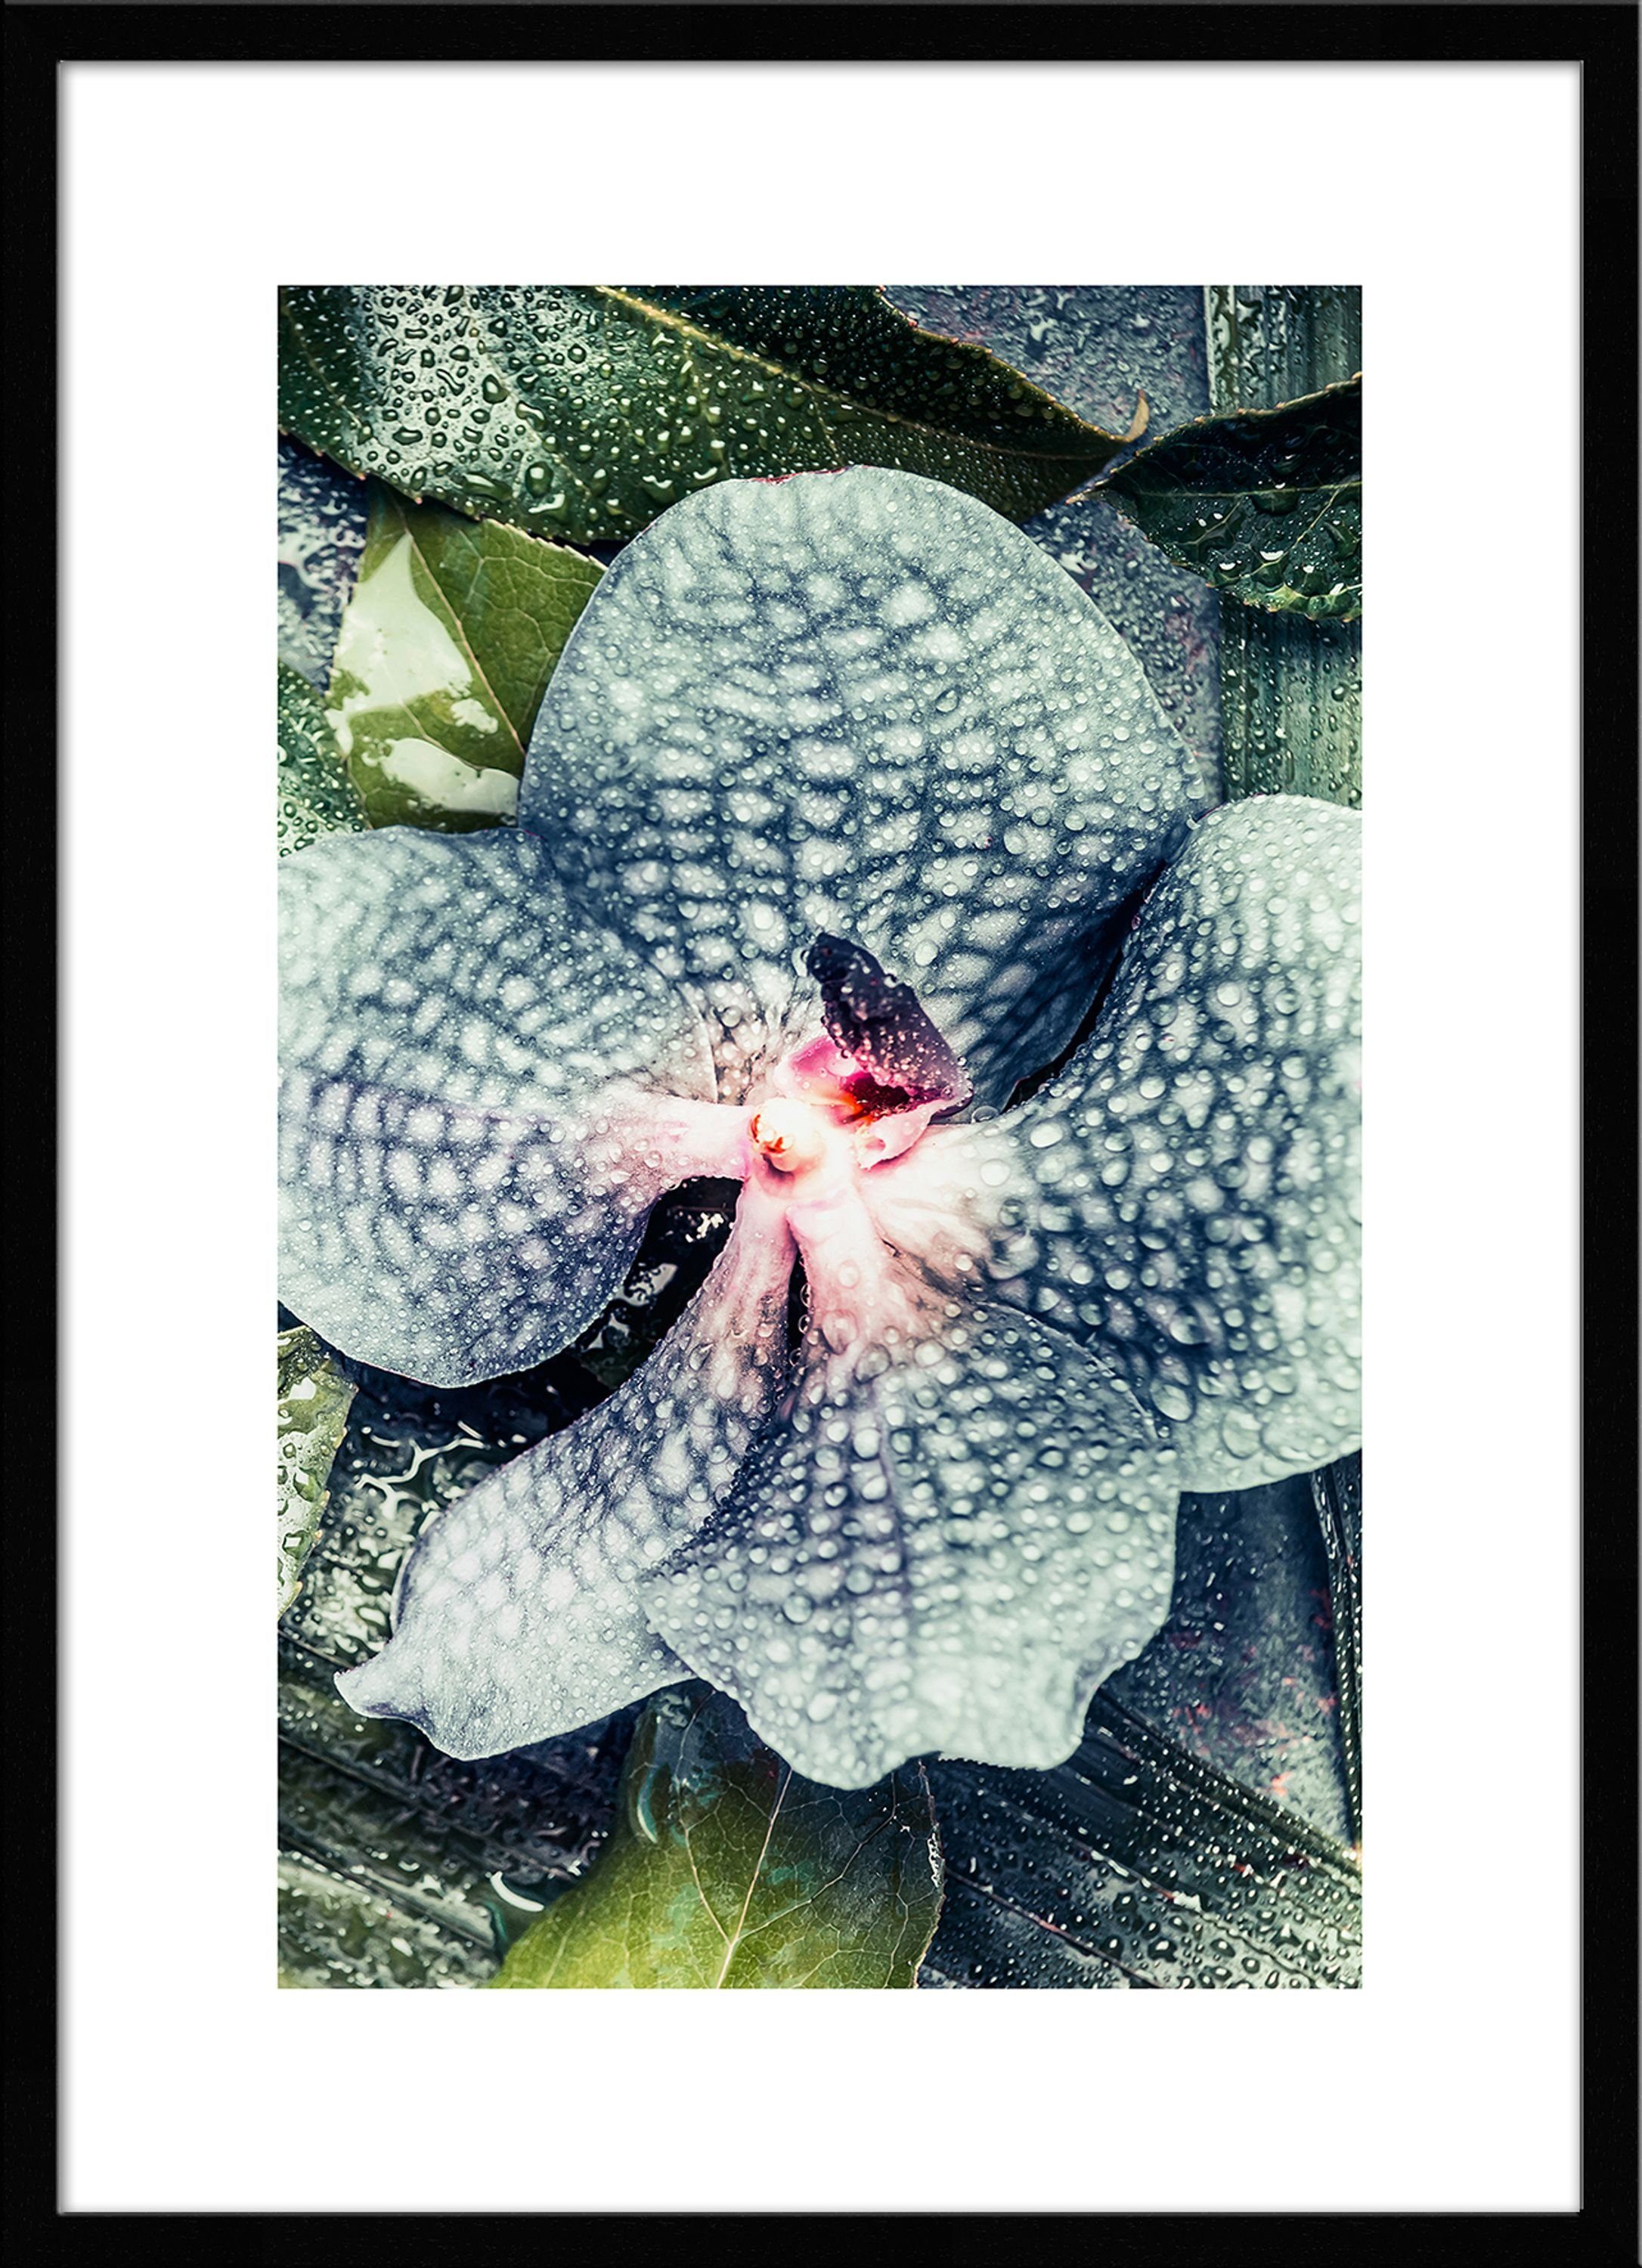 / Bild Orchidee mit Rahmen artissimo mit Design-Poster 51x71cm Holz-Rahmen / Wandbild, gerahmt Bild